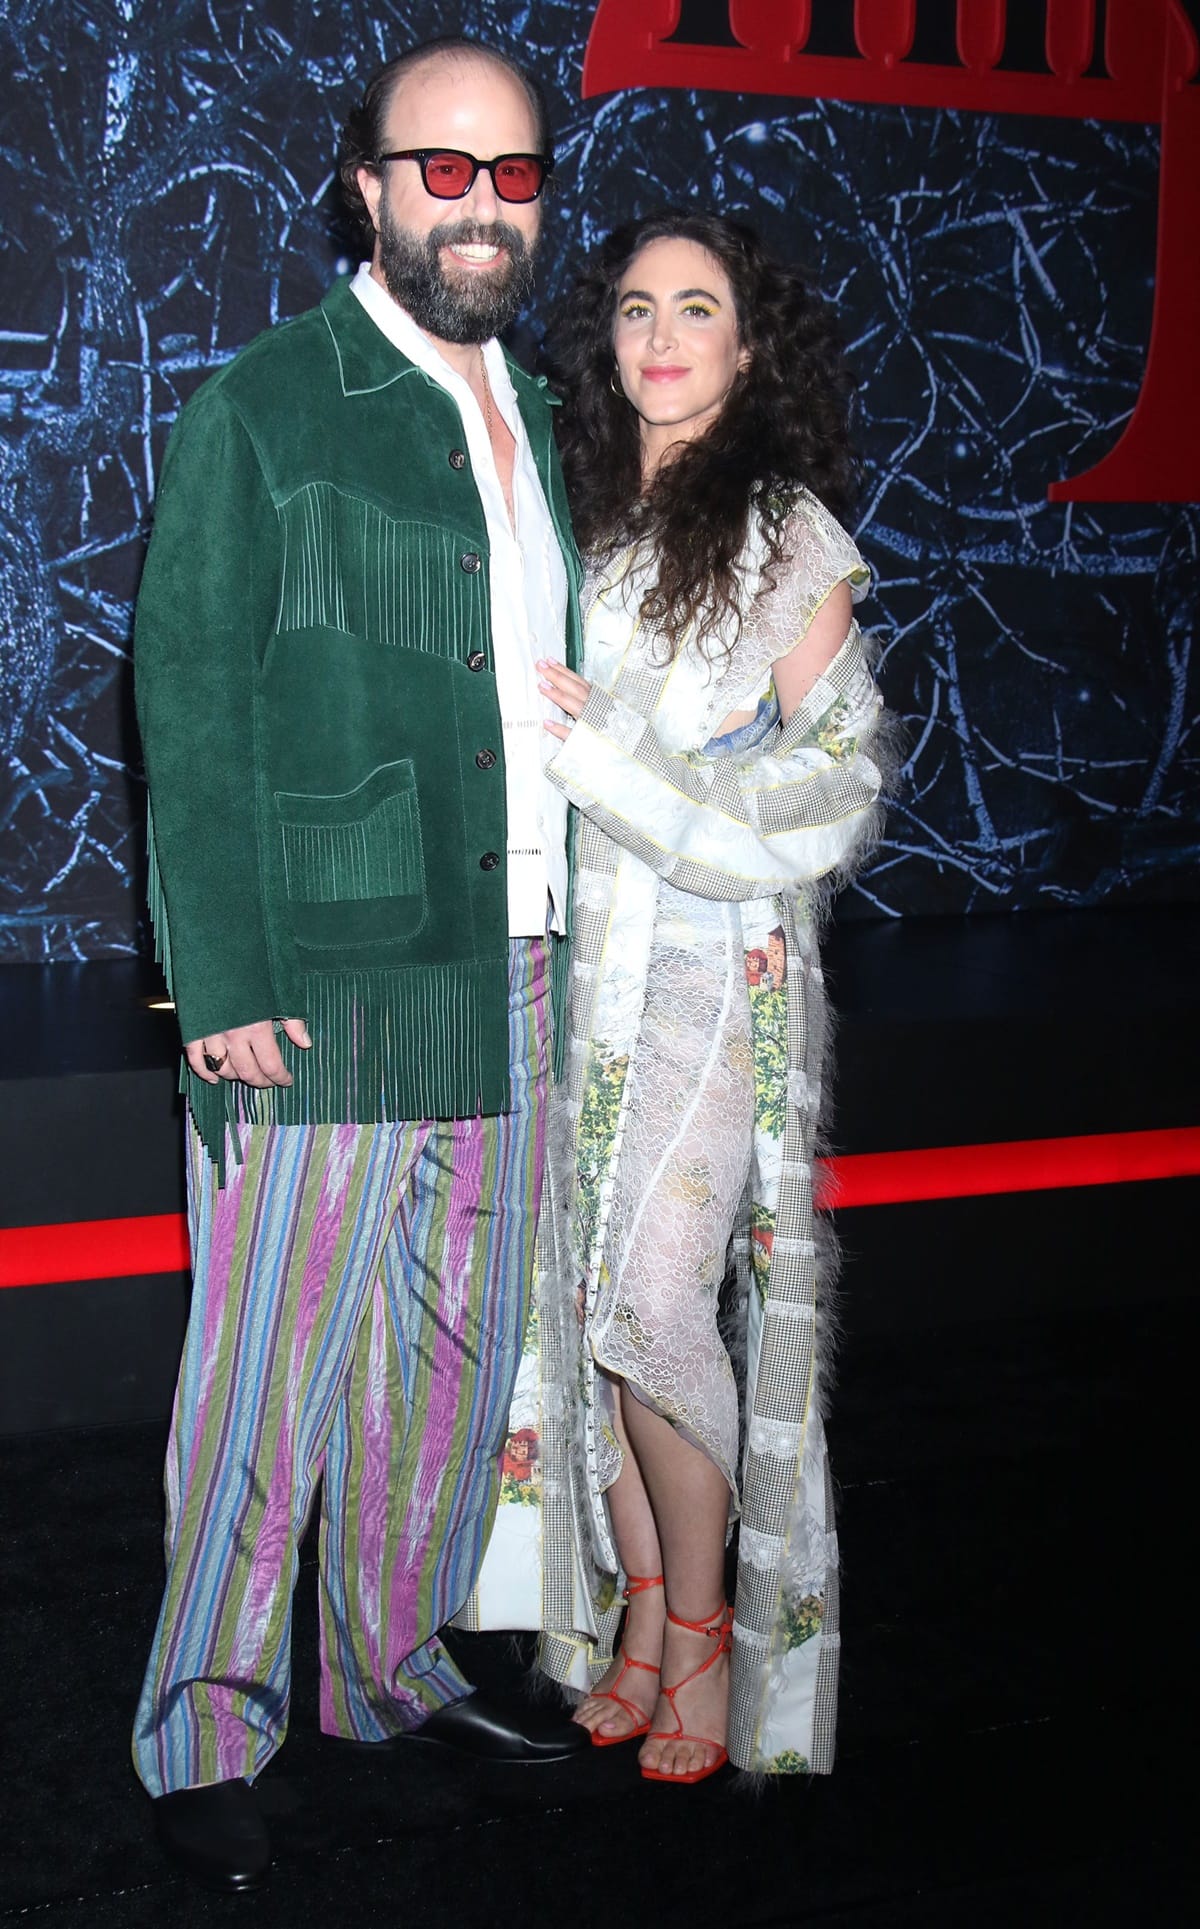 Brett Gelman and his girlfriend Ari Dayan attend Netflix's "Stranger Things" season 4 premiere